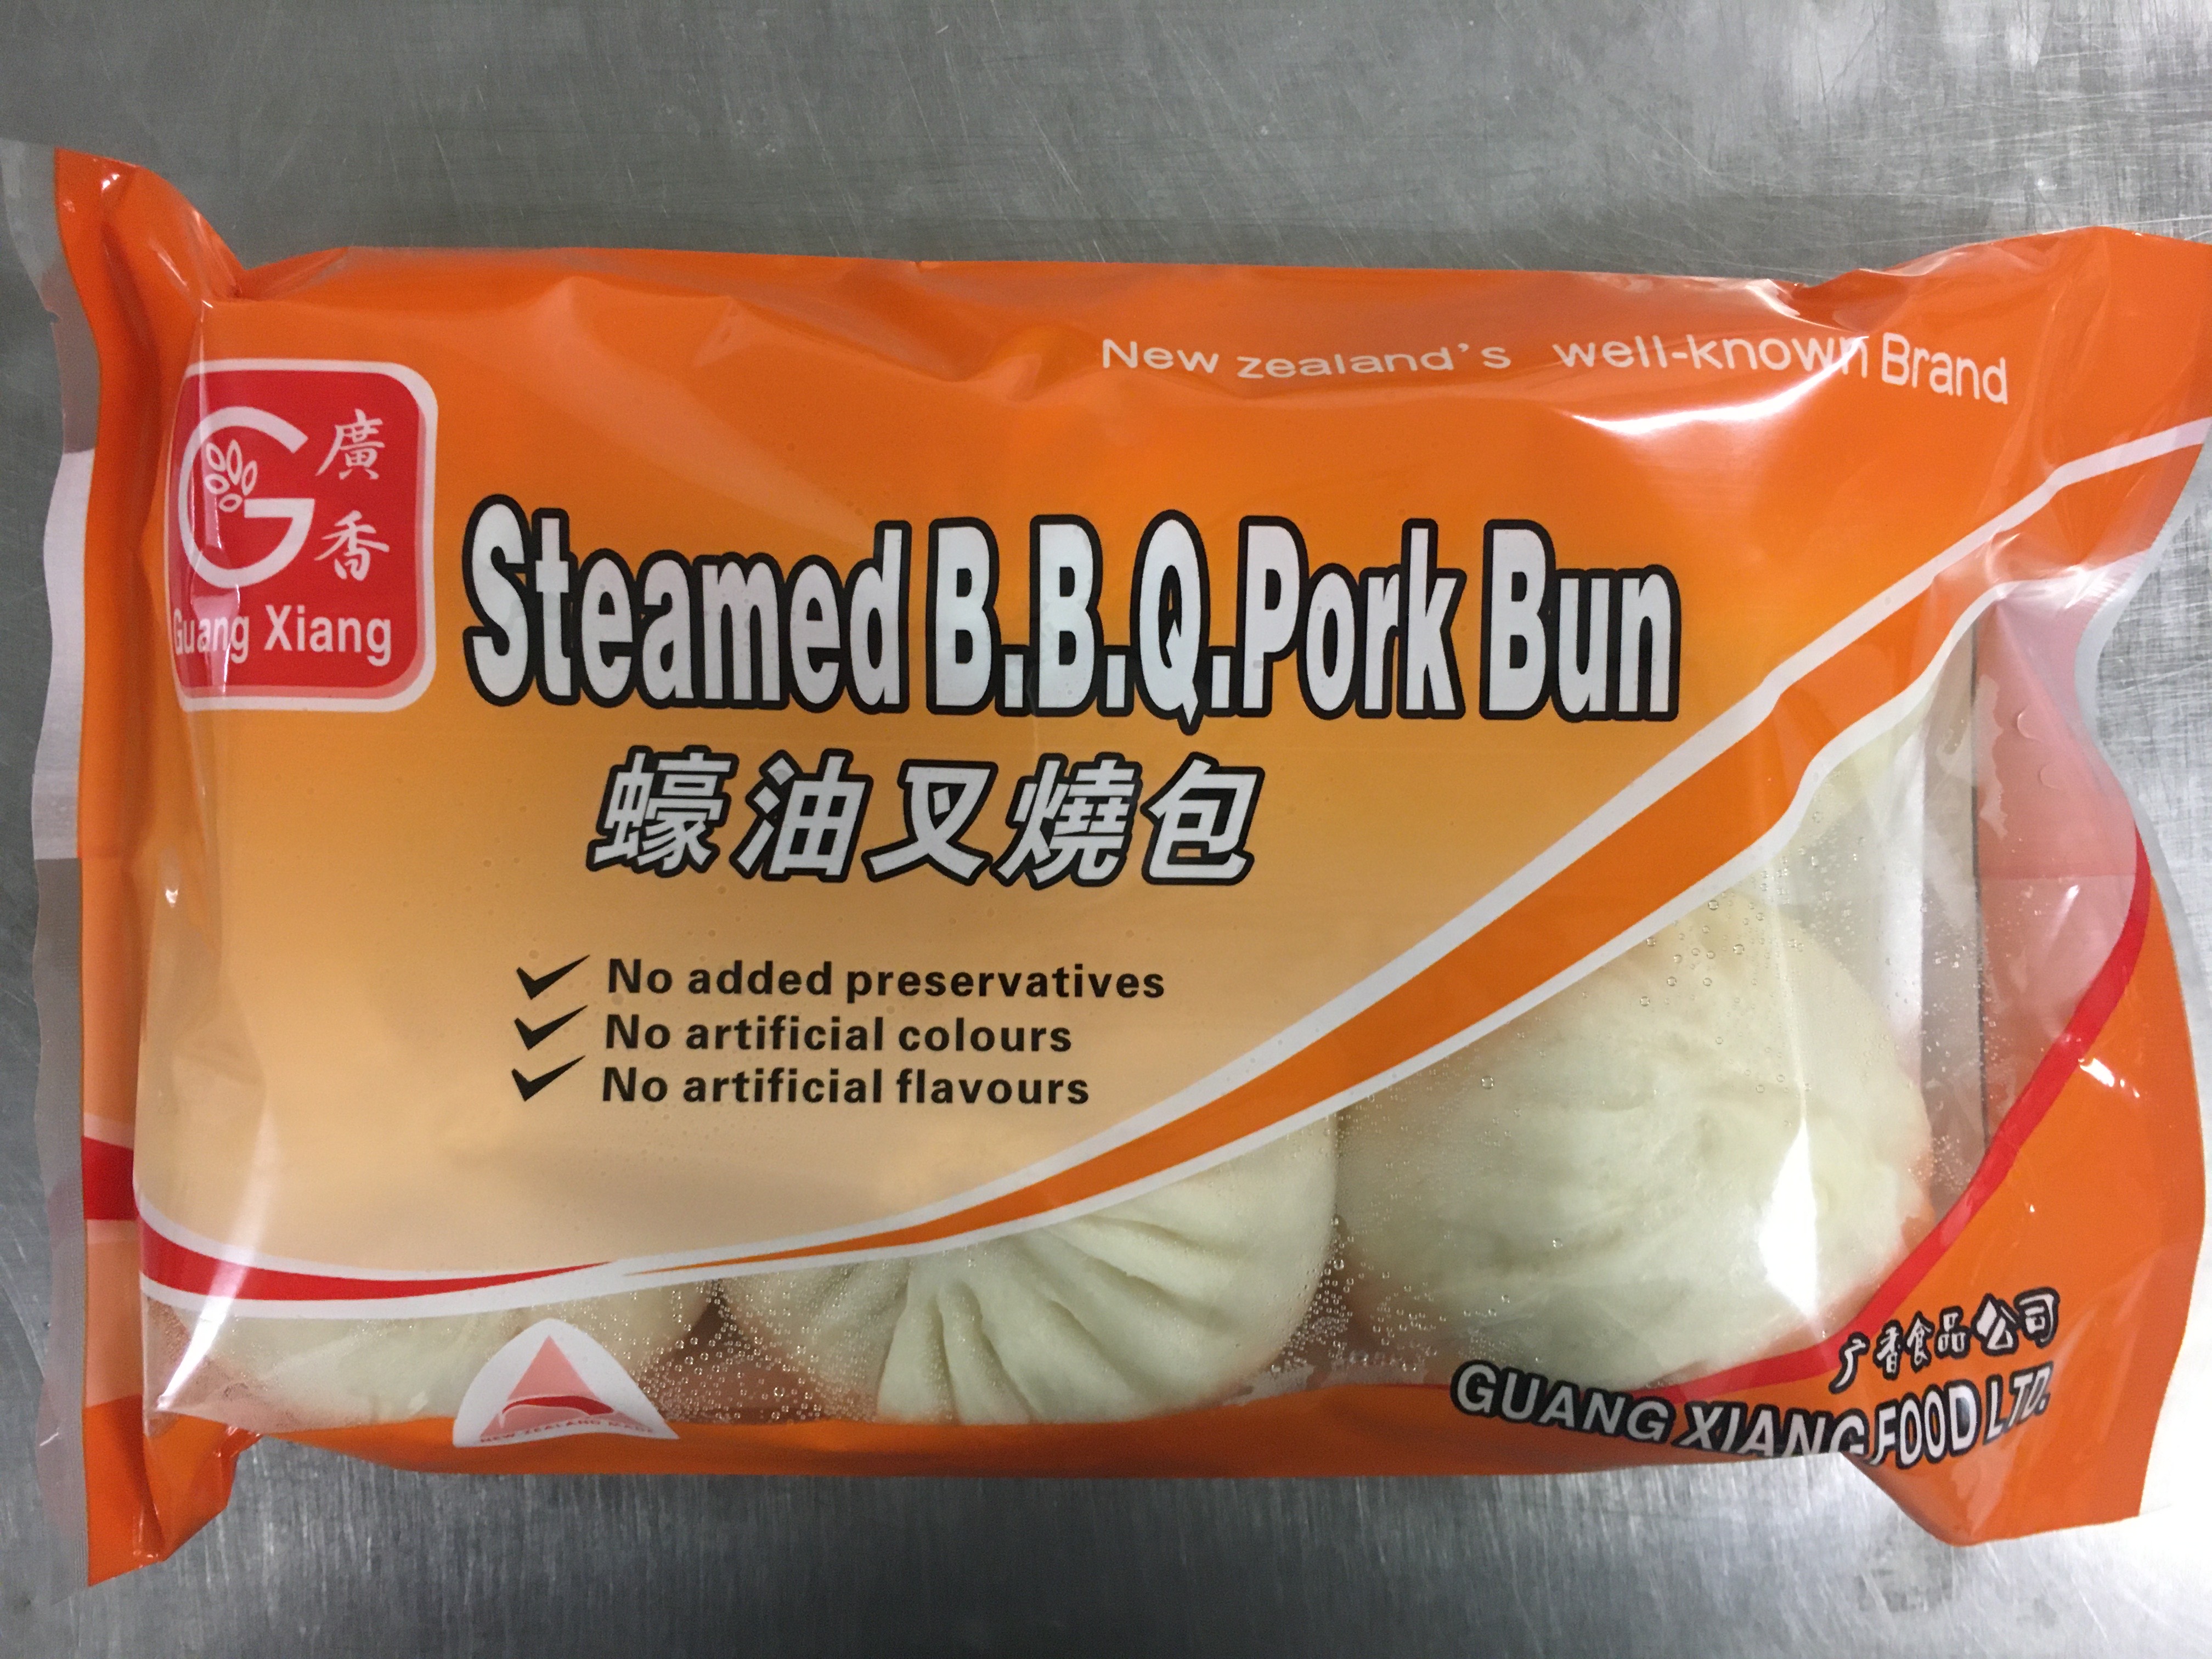 Image of Guangxiang brand Steamed B.B.Q. Pork Bun (522g) in a plasti pack